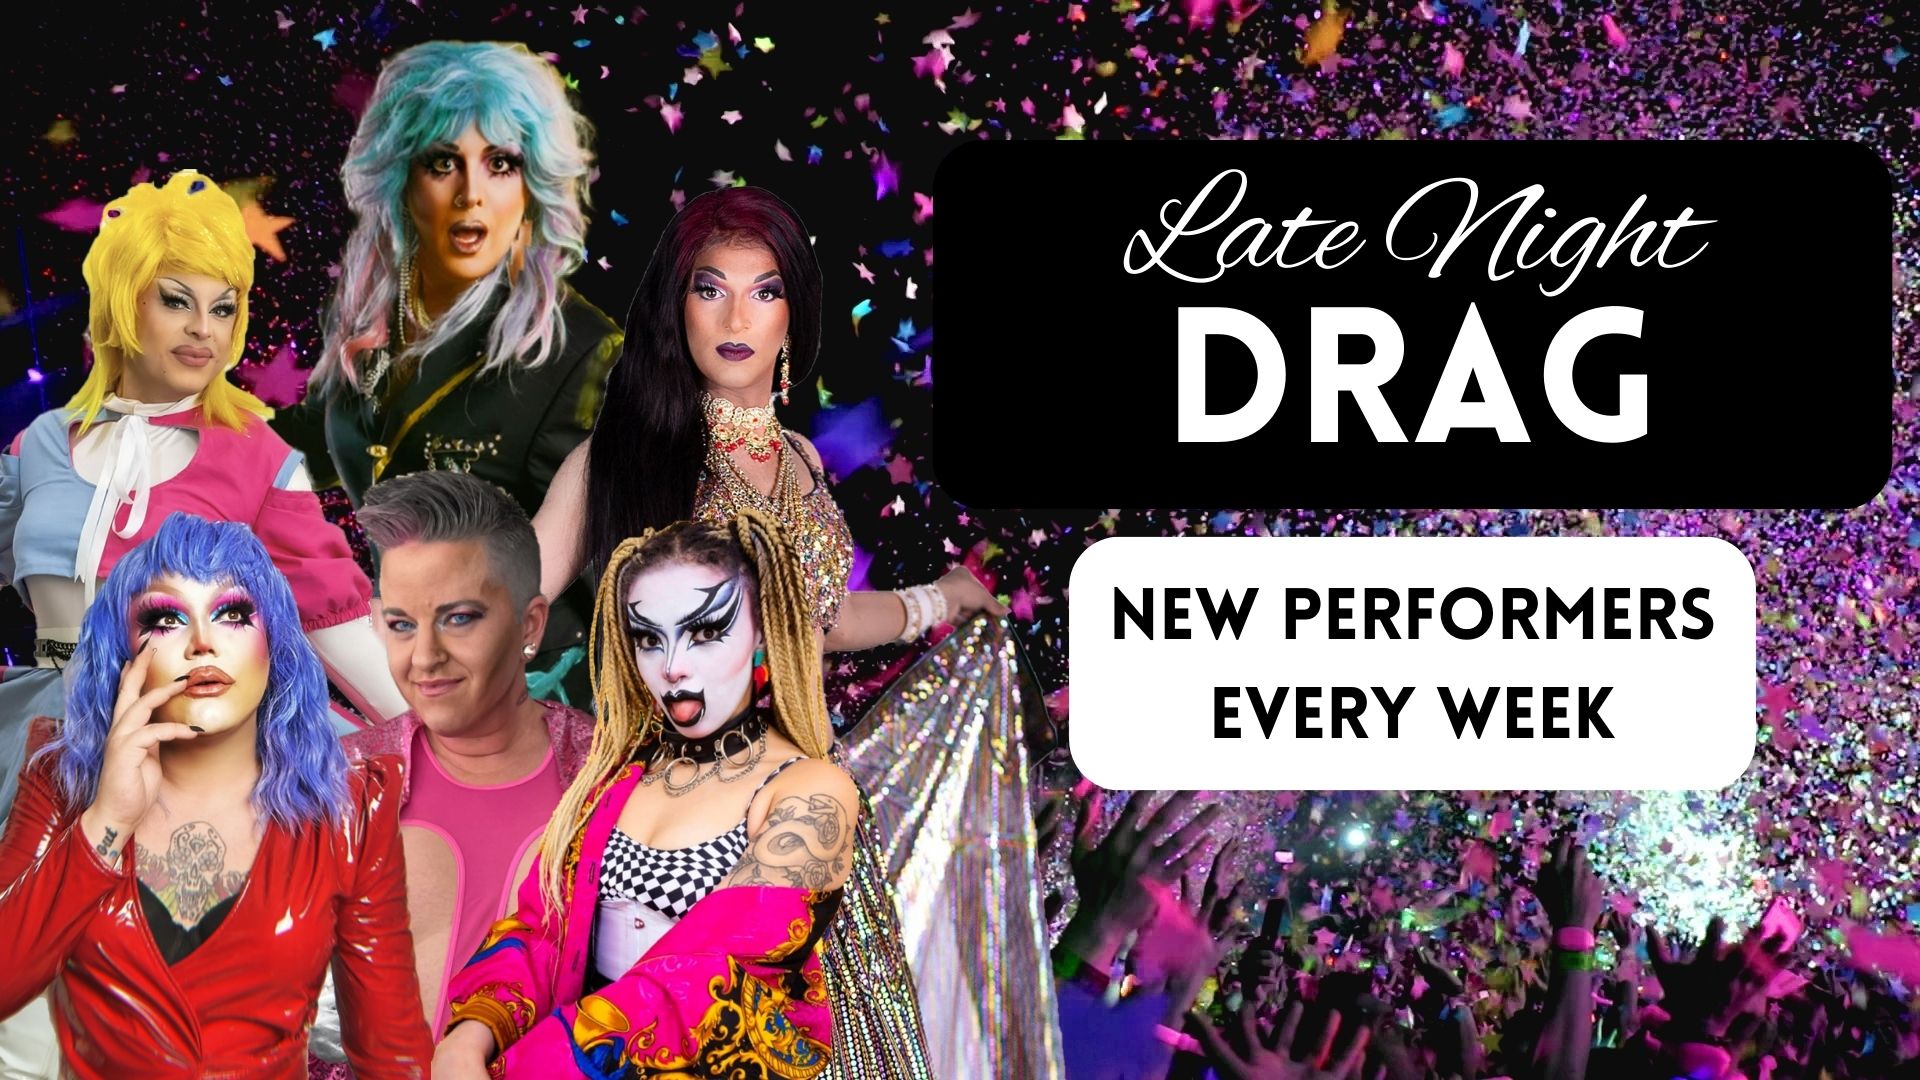 A poster with six local drag performers: Henrietta Dubet, Mina Mercury, Jolene Sloan, Lilith Cain, Chaz Avery, Peaches N Screams.